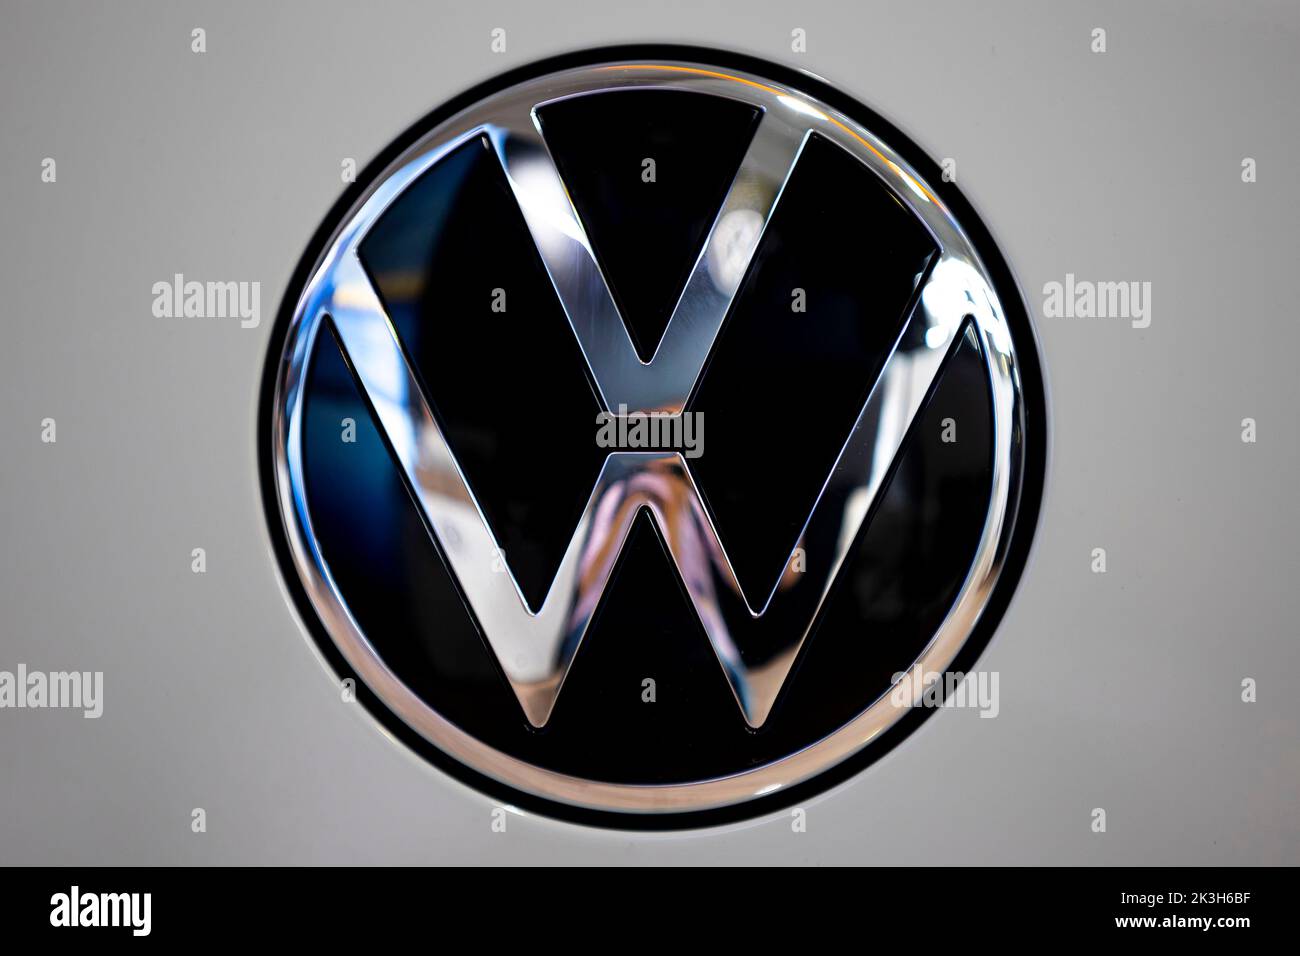 Volkswagen, VW logo, corporate identity, lettering, optional, white  background, Germany Stock Photo - Alamy